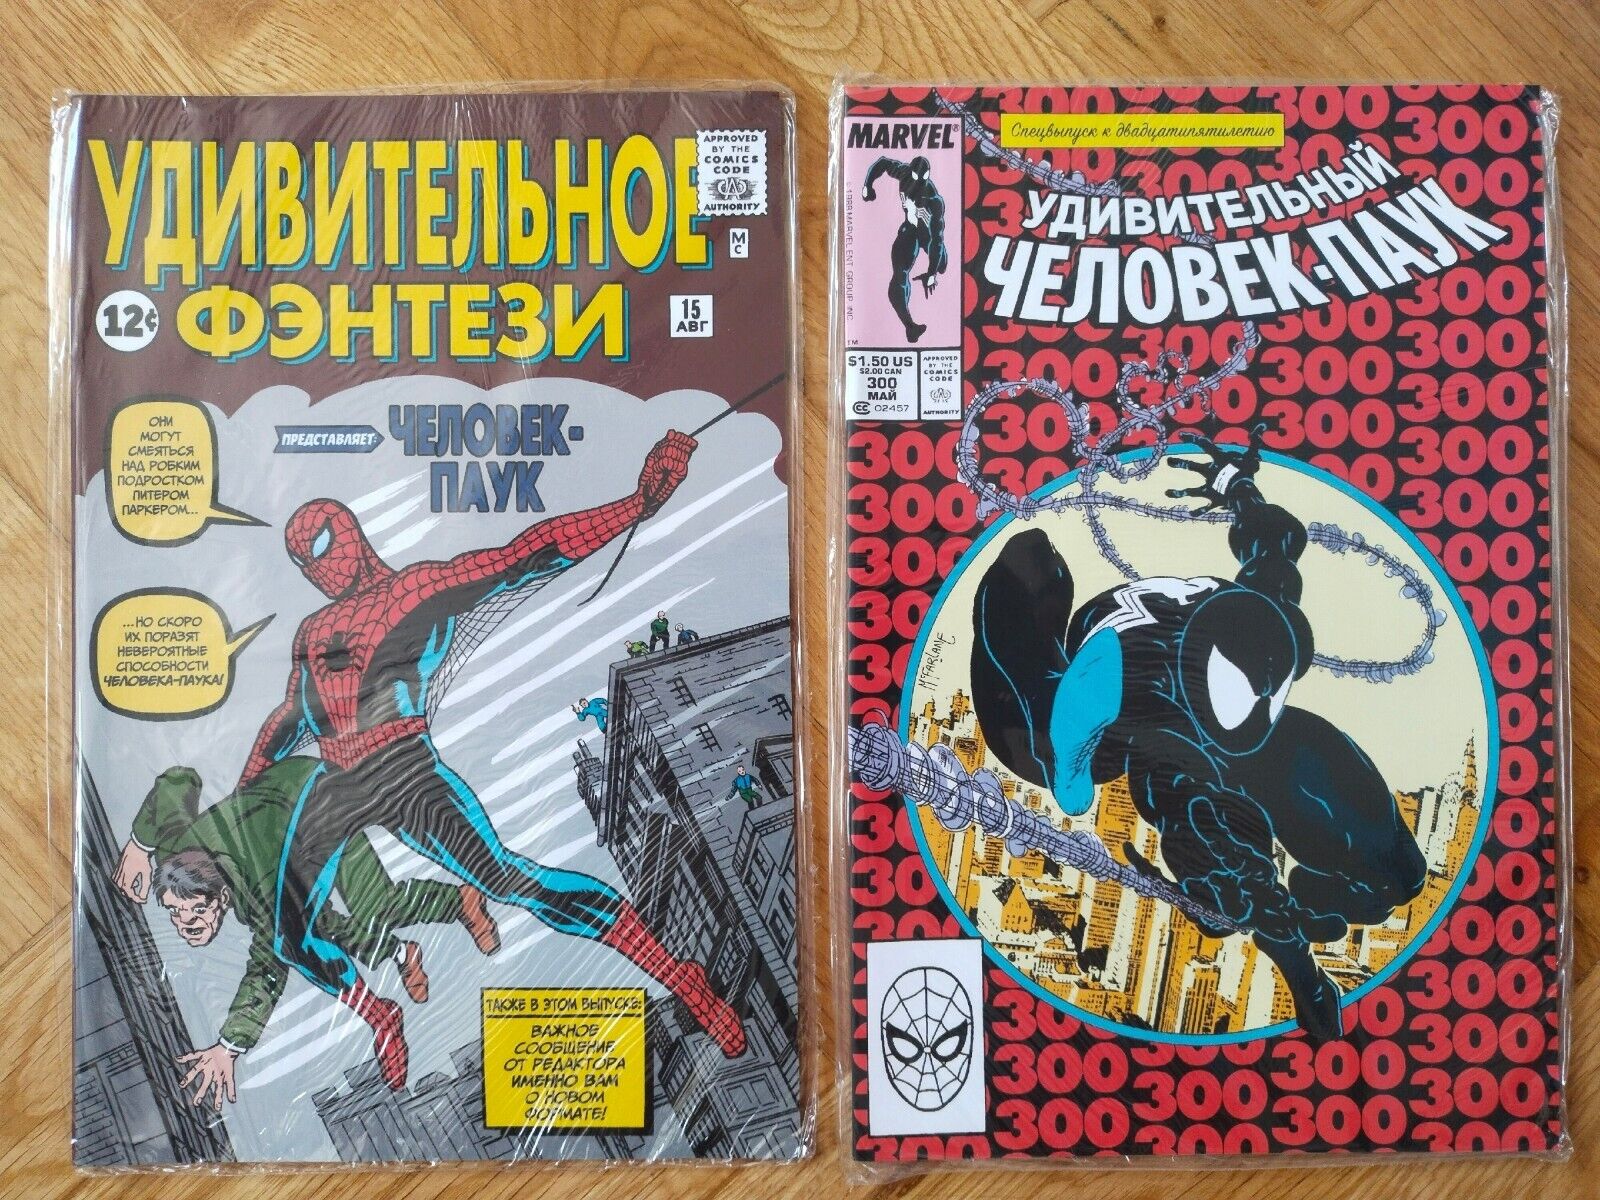 Lot Rare Foreign Edition Amazing Spider-Man #300 1st Venom Amazing Fantasy #15